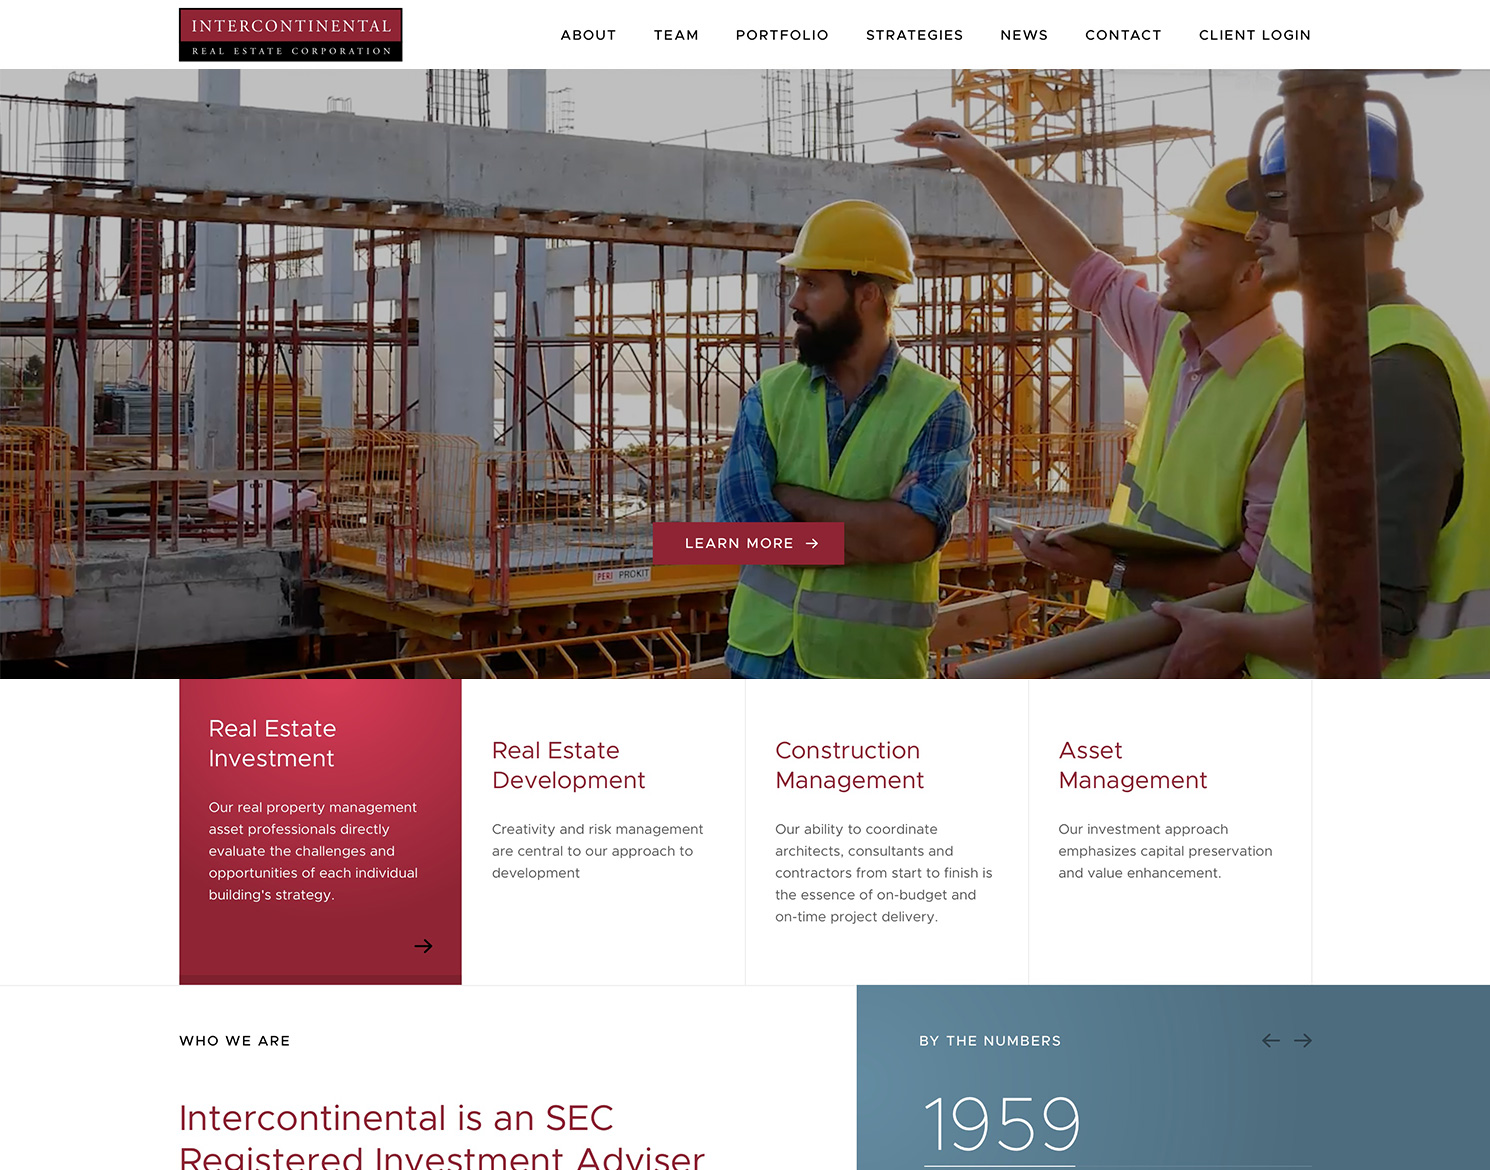 Intercontinental website design homepage showing marketing support